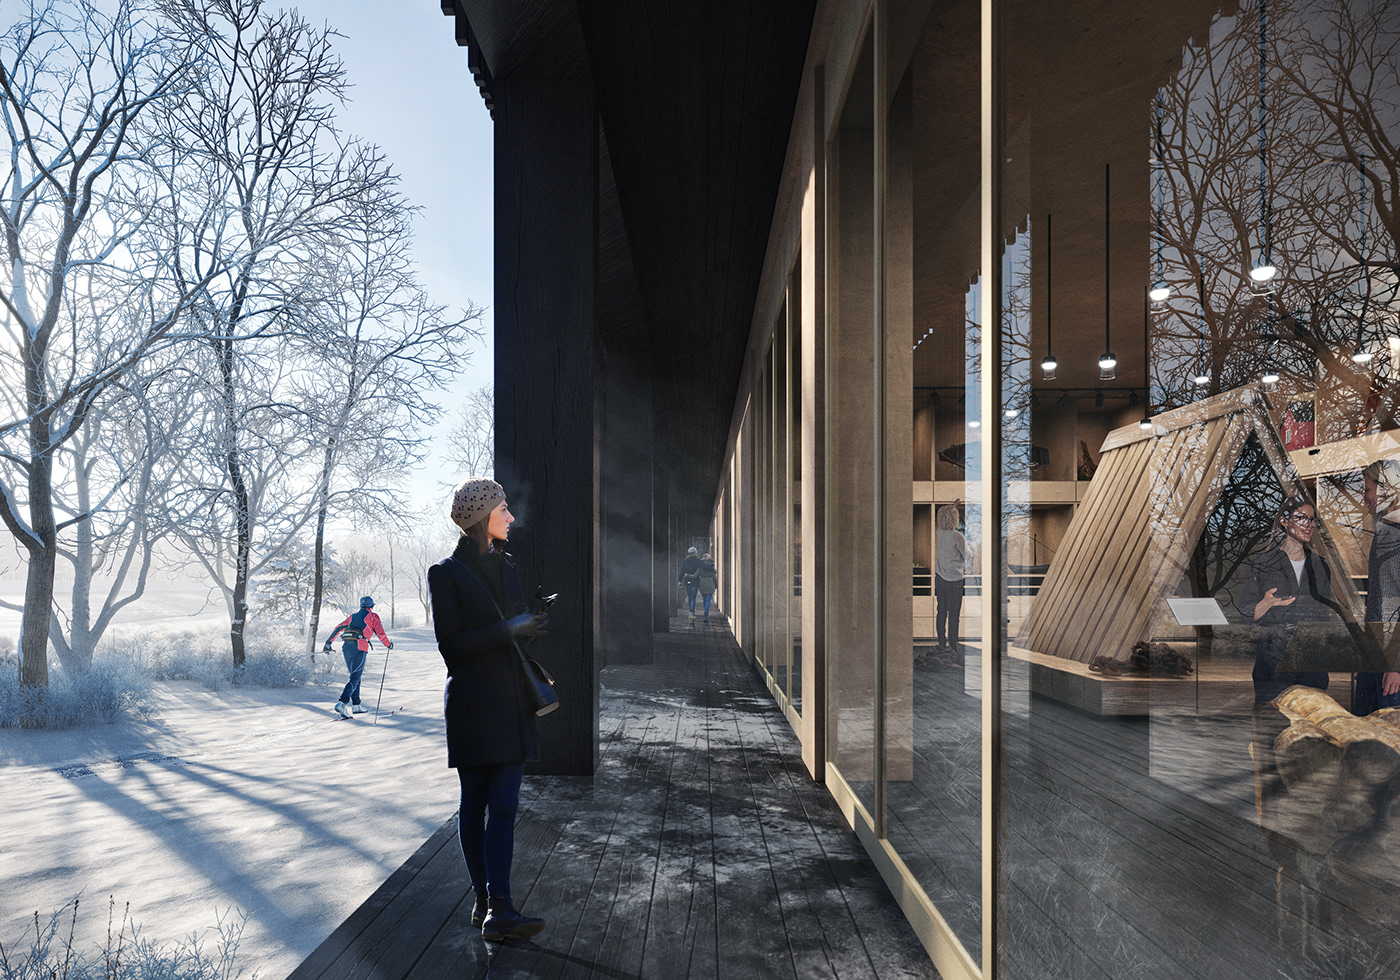 architecture archviz atmospheric corona render  museum norway vision visualization vivid wood